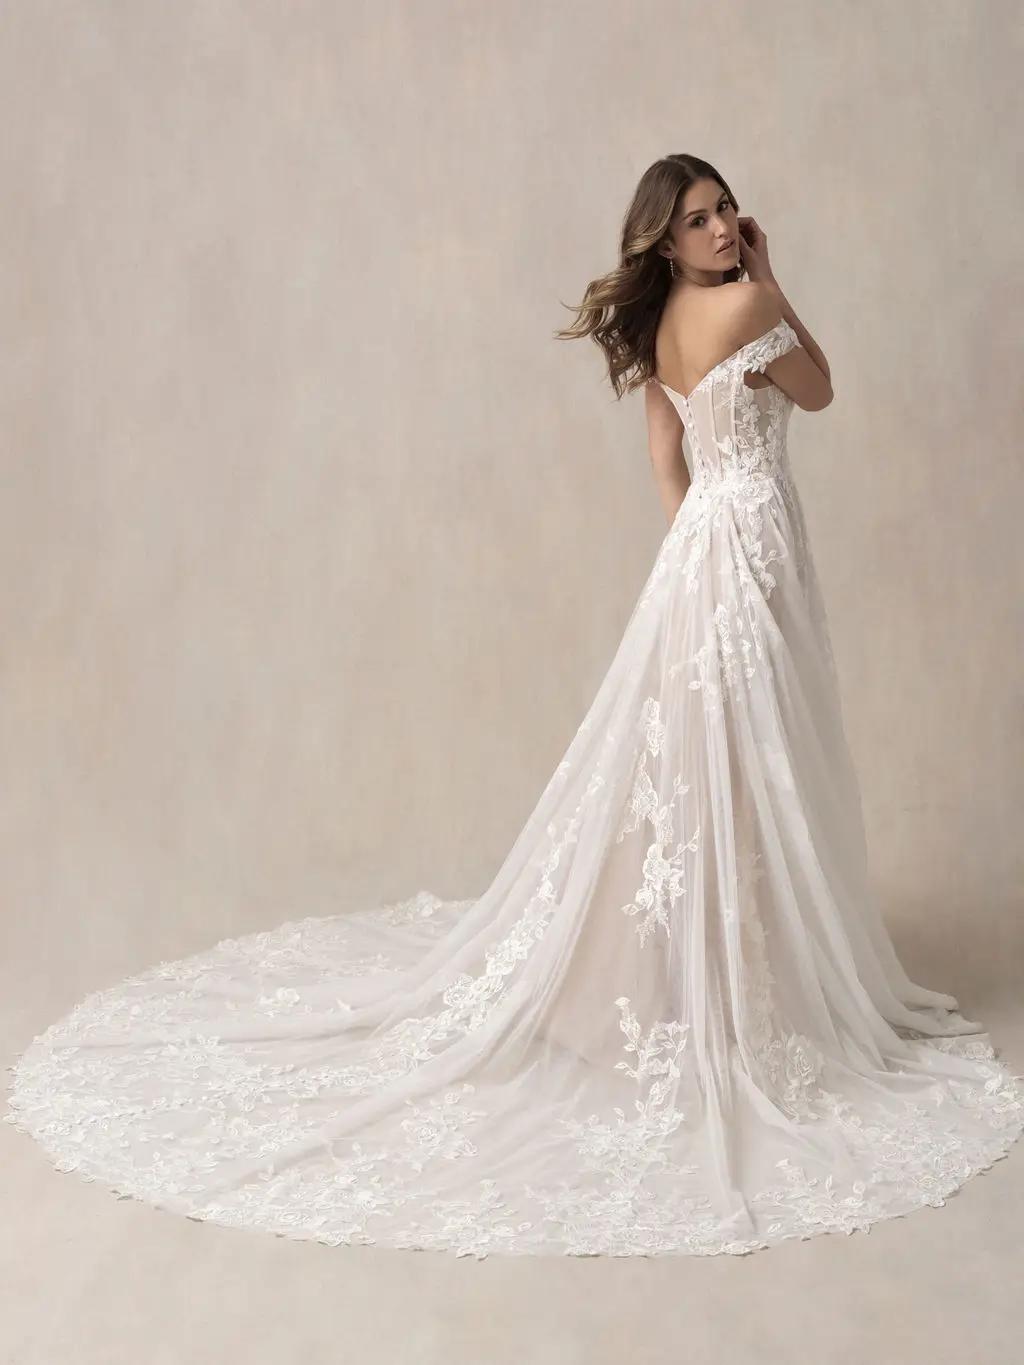 Discover Amazing Deals At The National Bridal Sale  at Always Elegant Bridal! Image